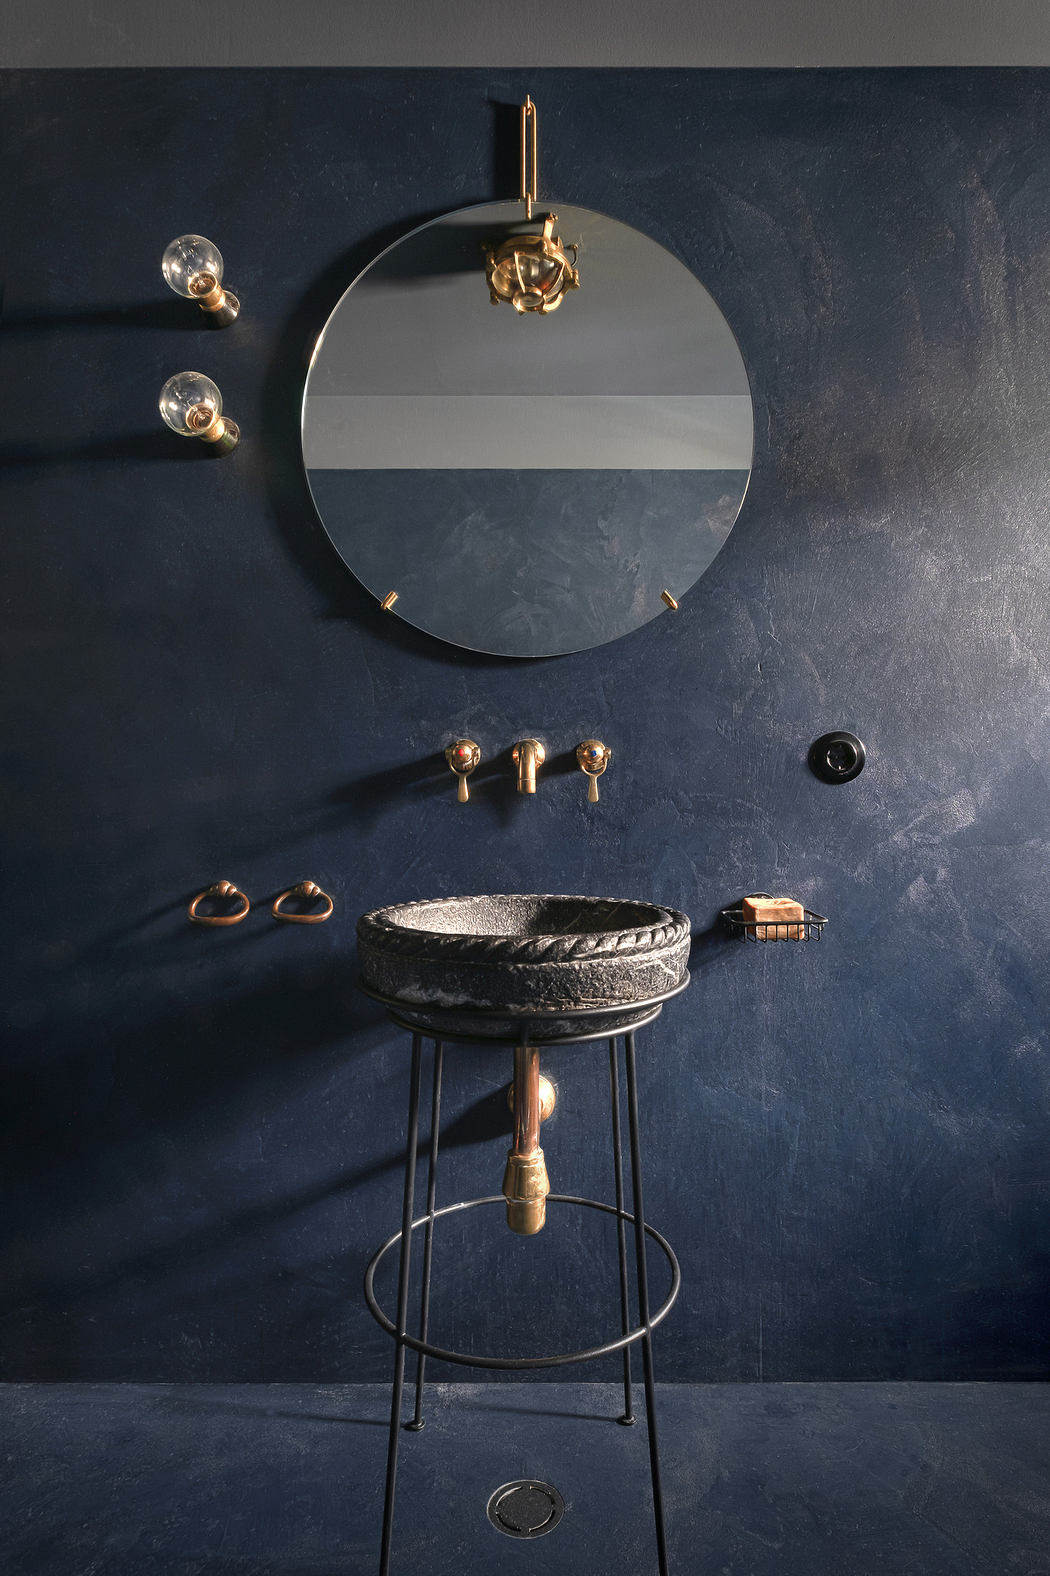 Elegant bathroom with dark blue walls, round mirror, and stylish accessories.